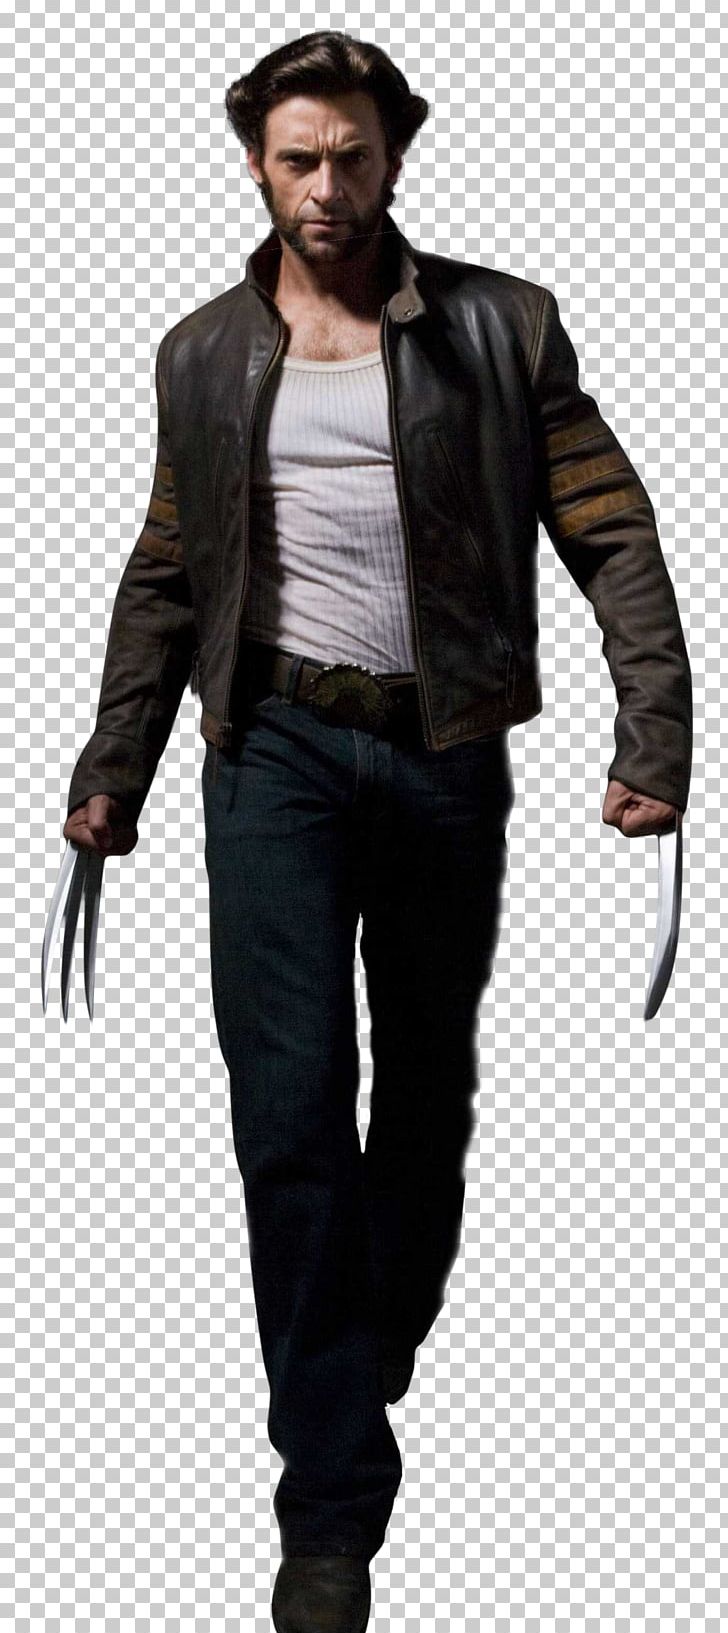 Hugh Jackman The Wolverine Professor X Magneto PNG, Clipart, Comic, Costume, Facial Hair, Film, Gentleman Free PNG Download